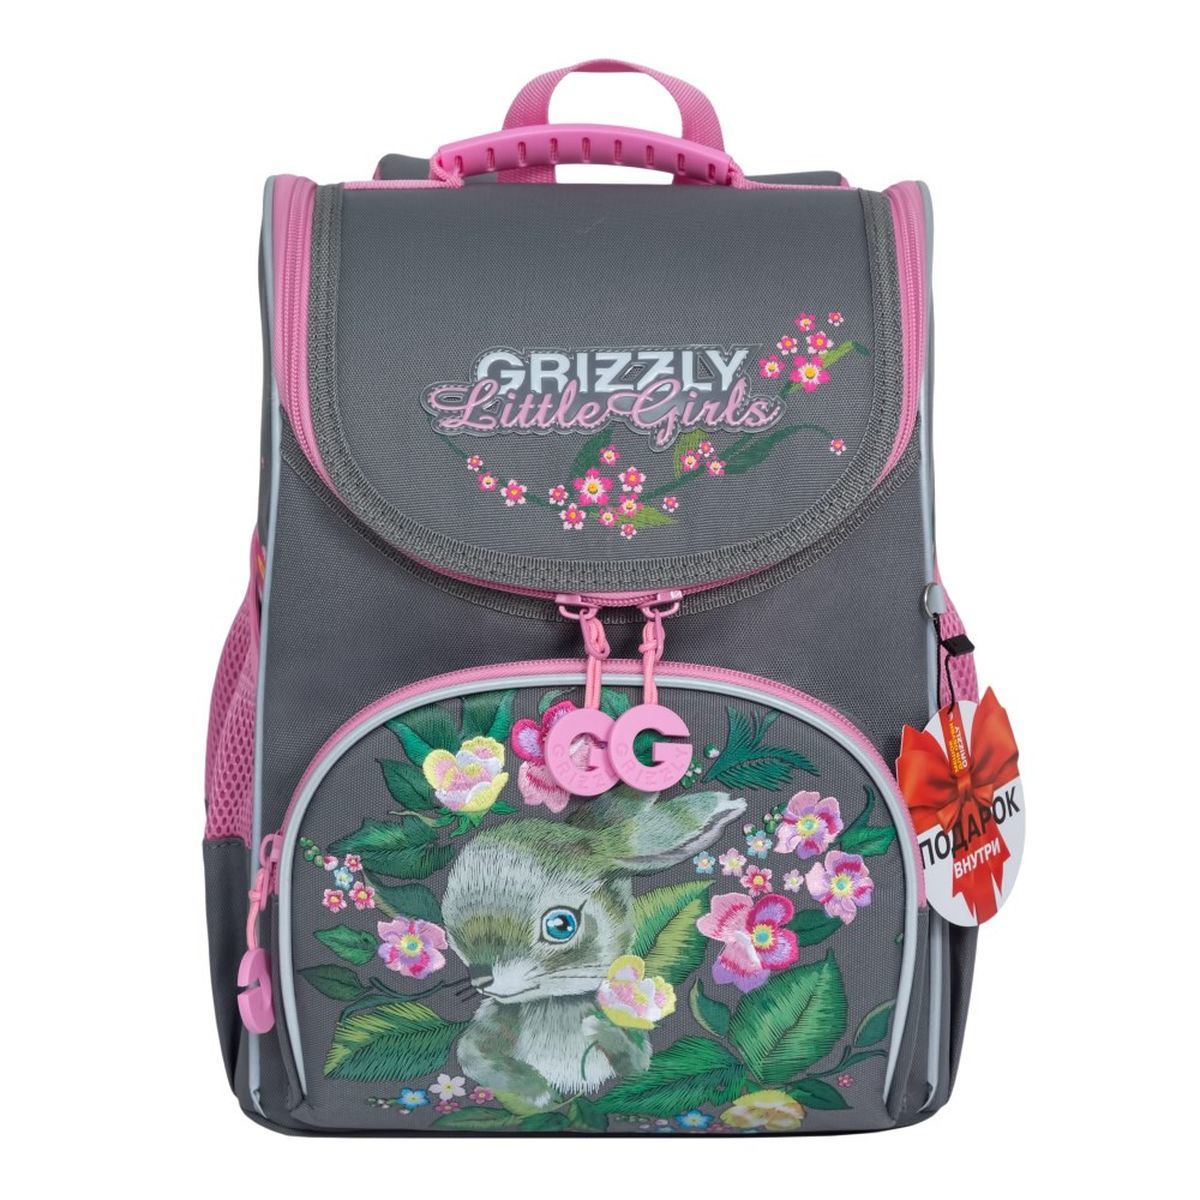 Школьный рюкзак Grizzly ra-973-3 серый с розовым